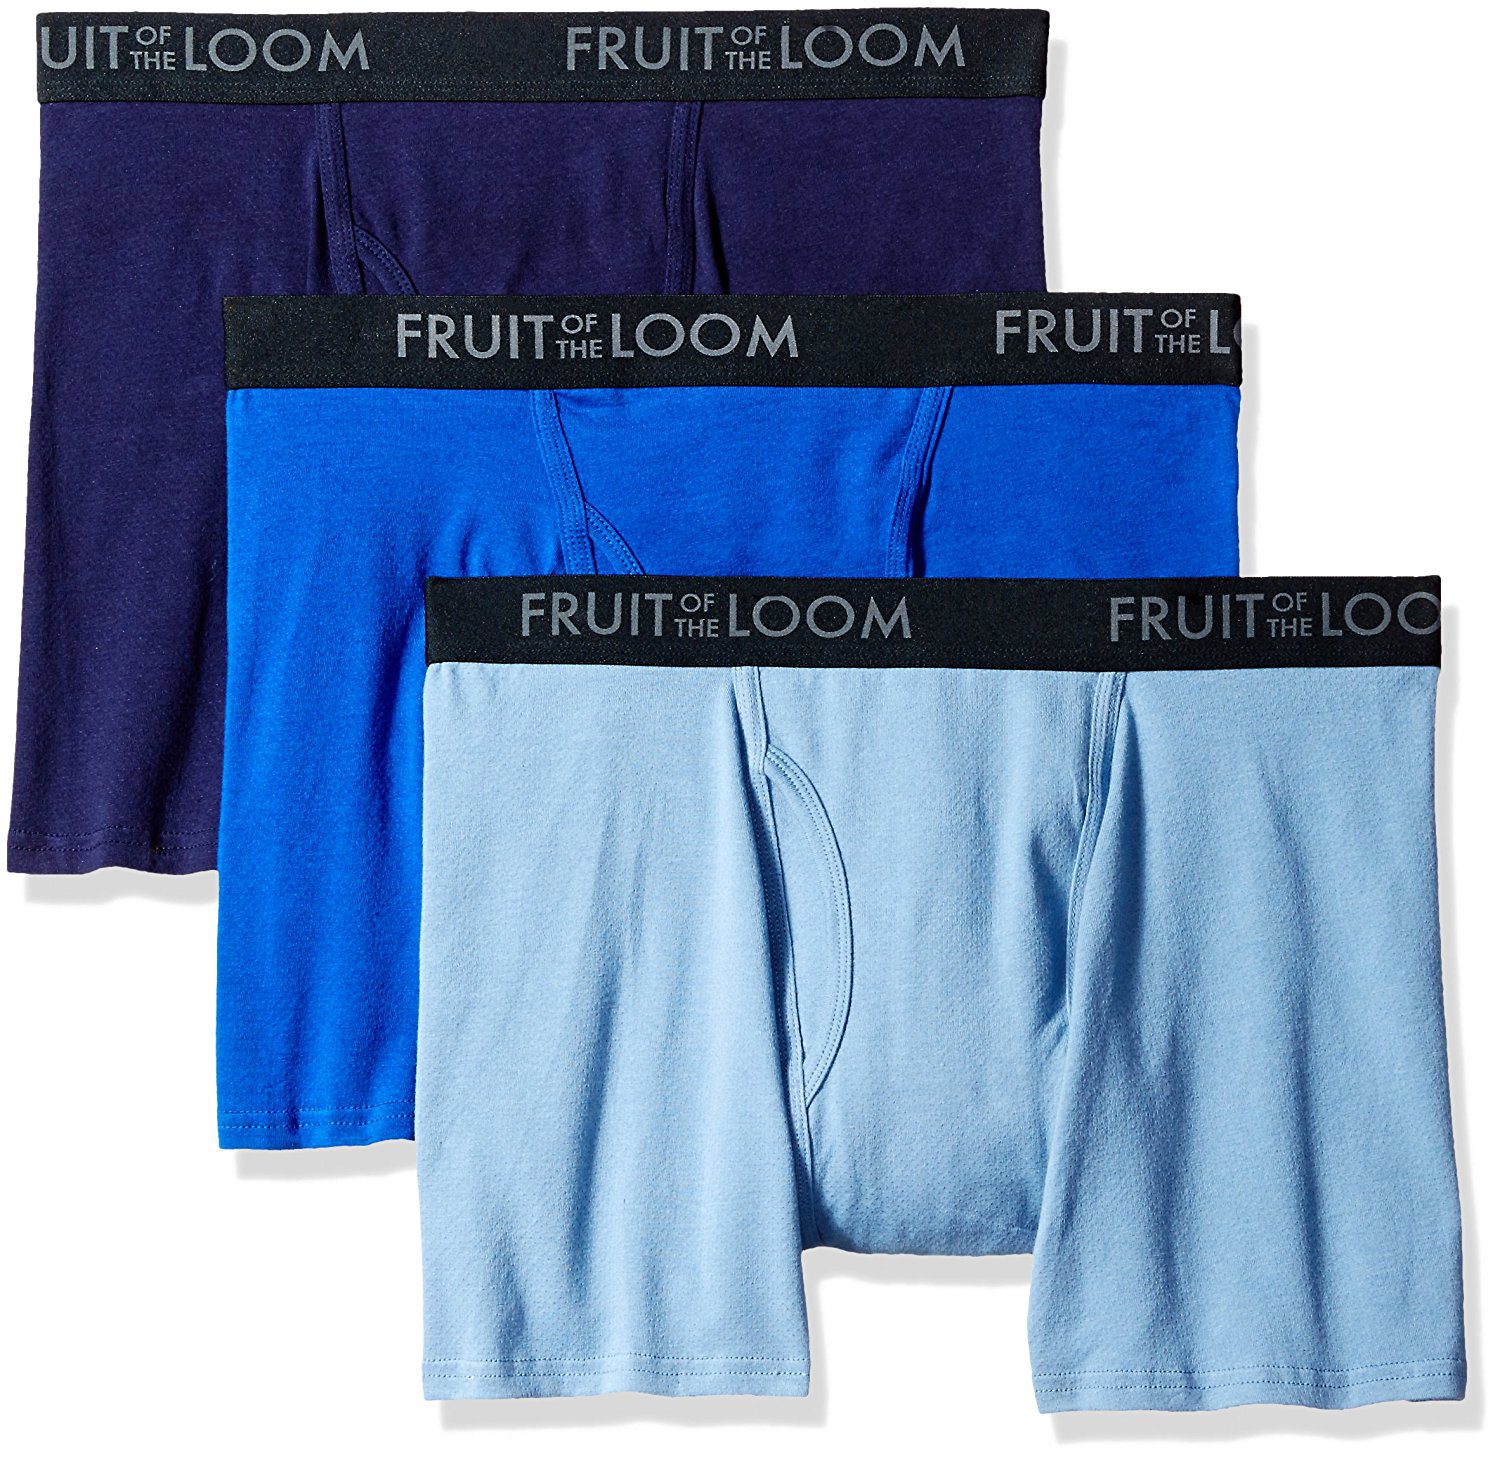 Men's Breathable Cotton Micro-Mesh Boxer Briefs, Assorted 3 Pack